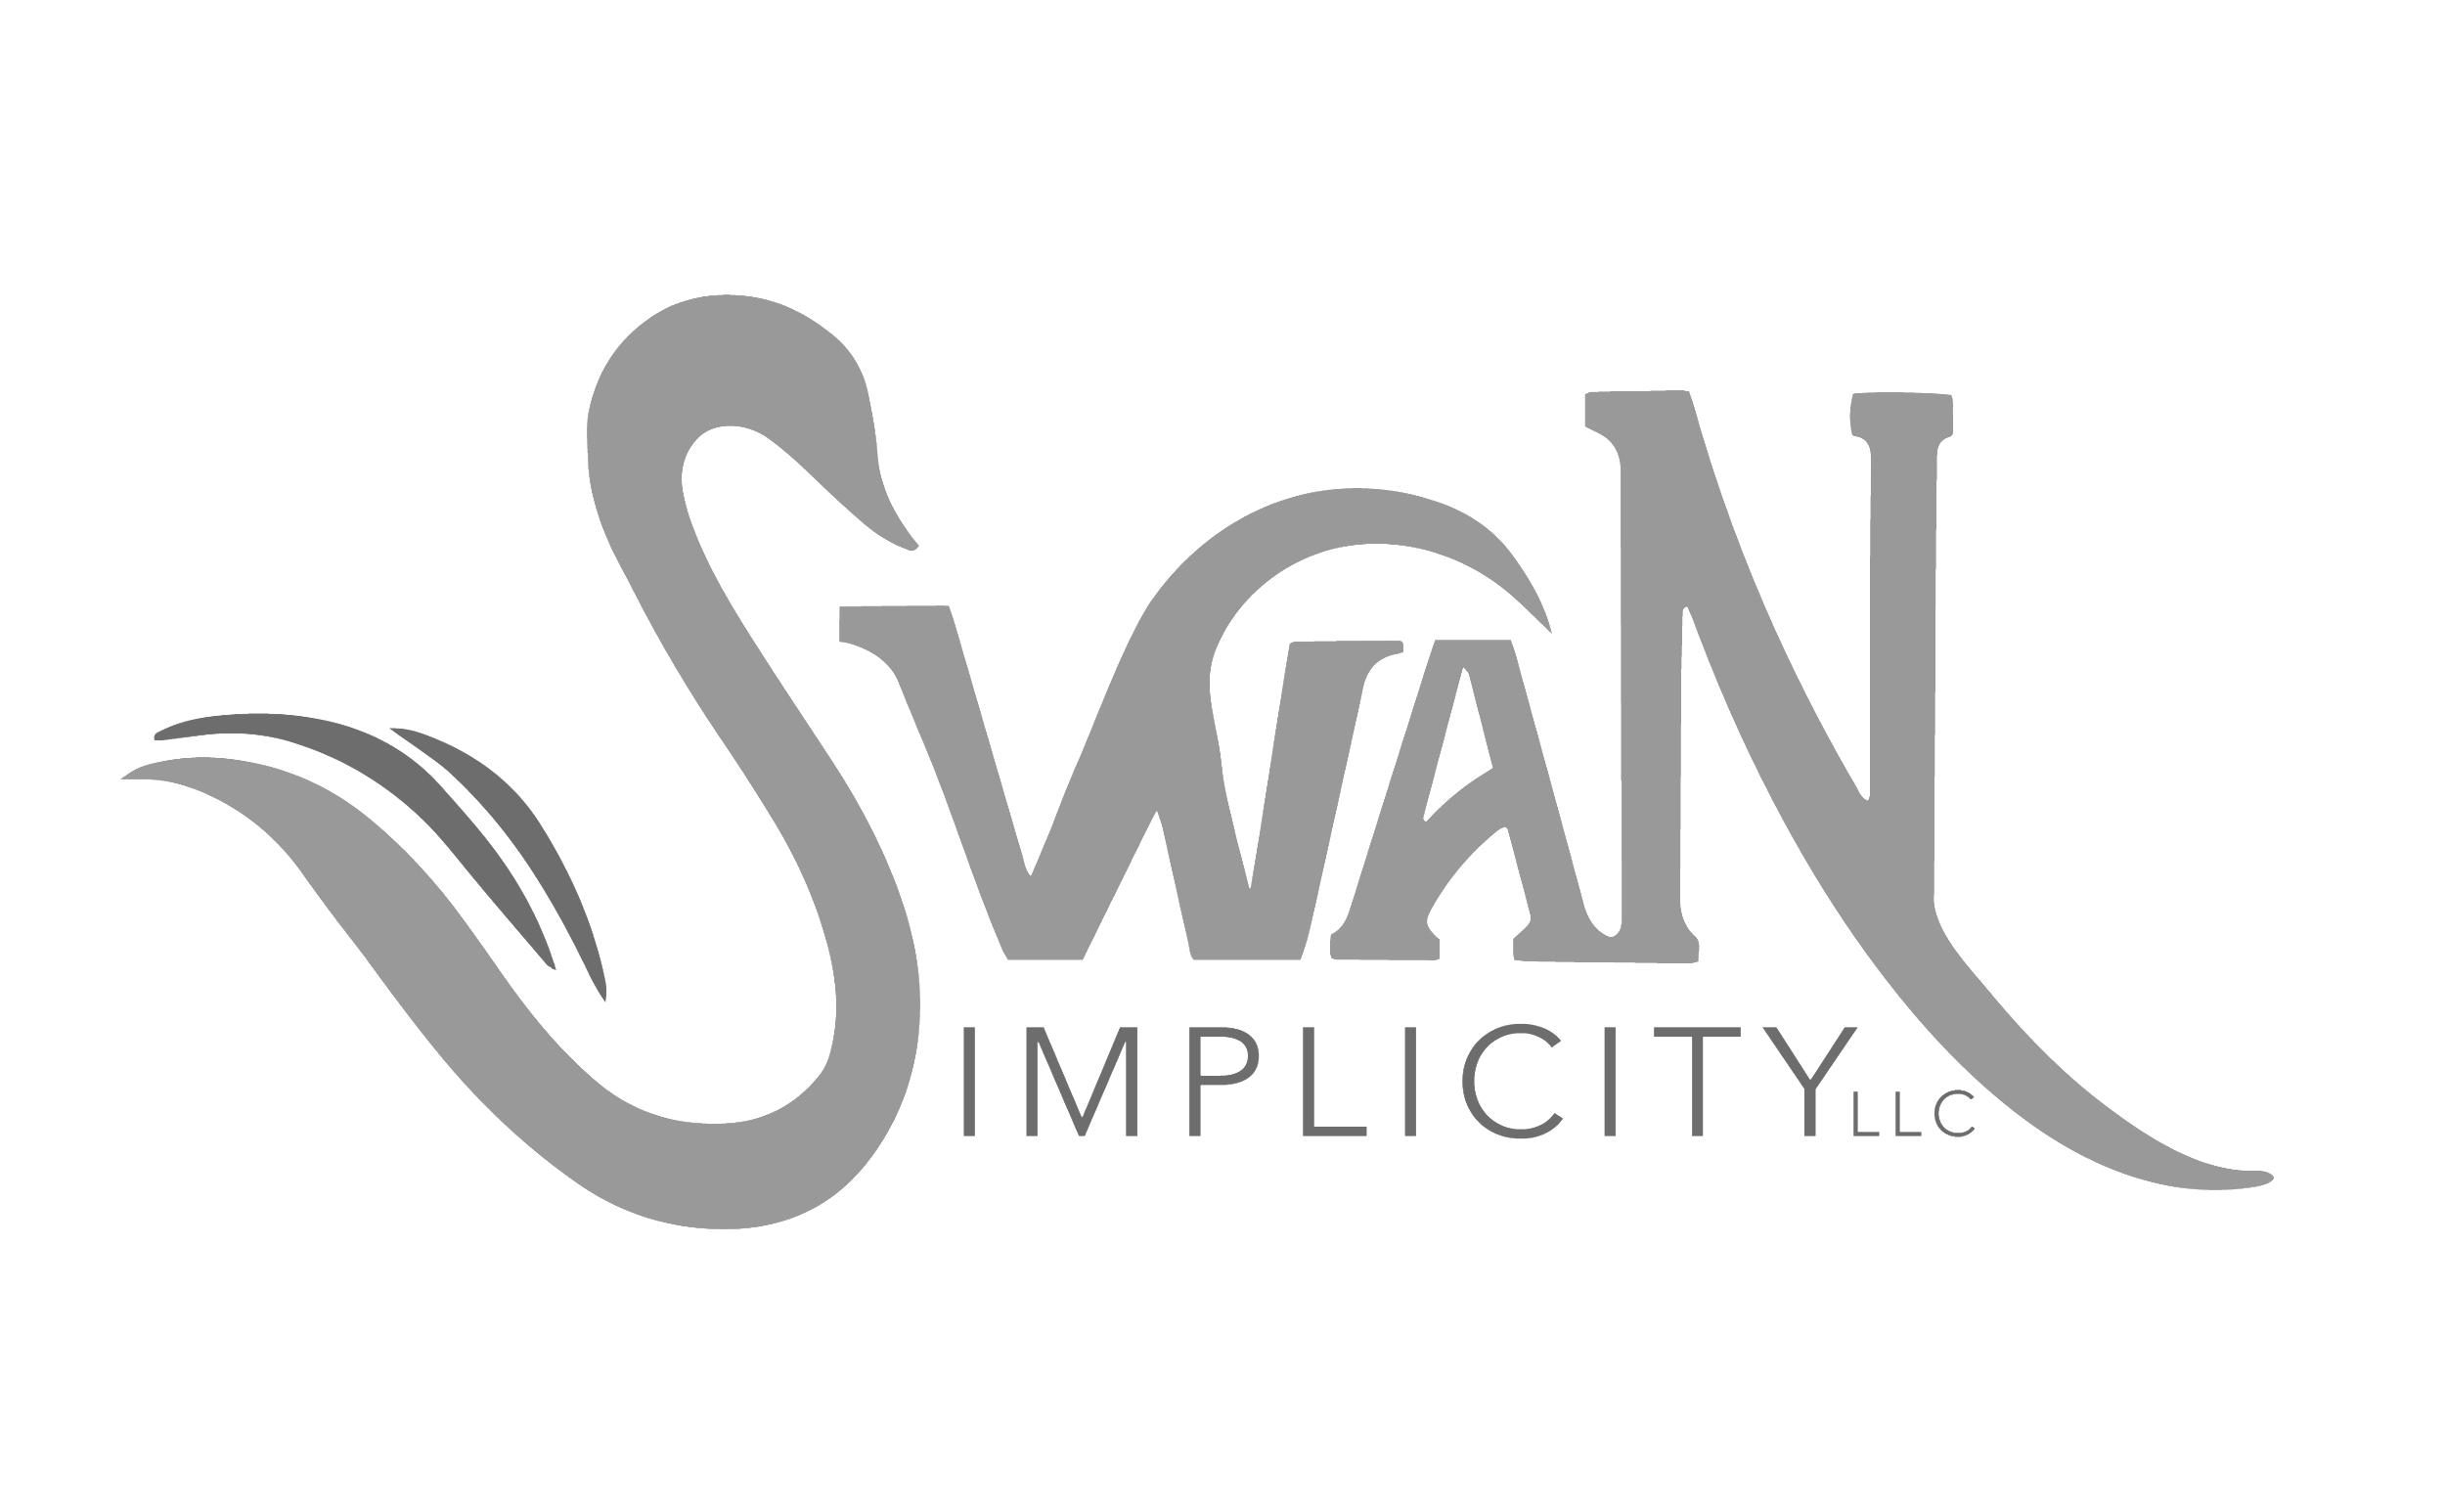 Swan Simplicity